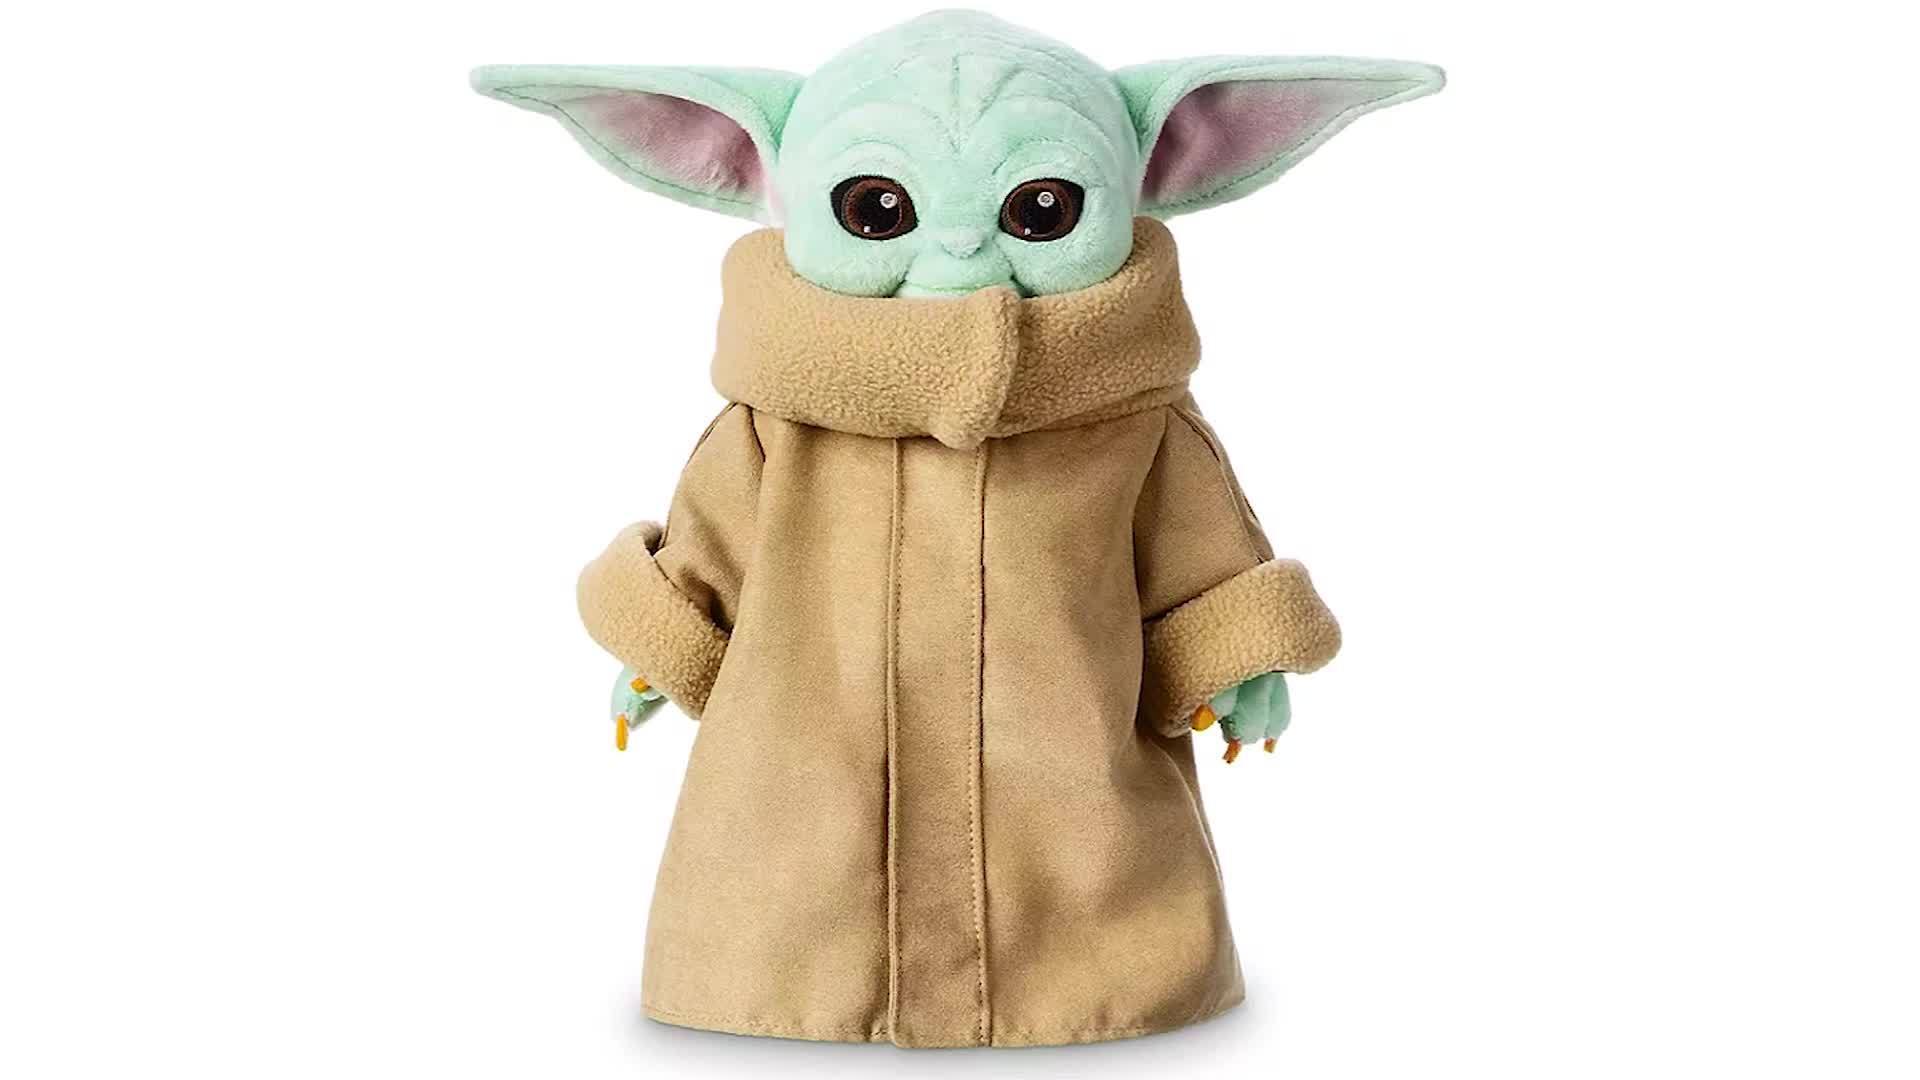 Disney unveils 'Baby Yoda' toy